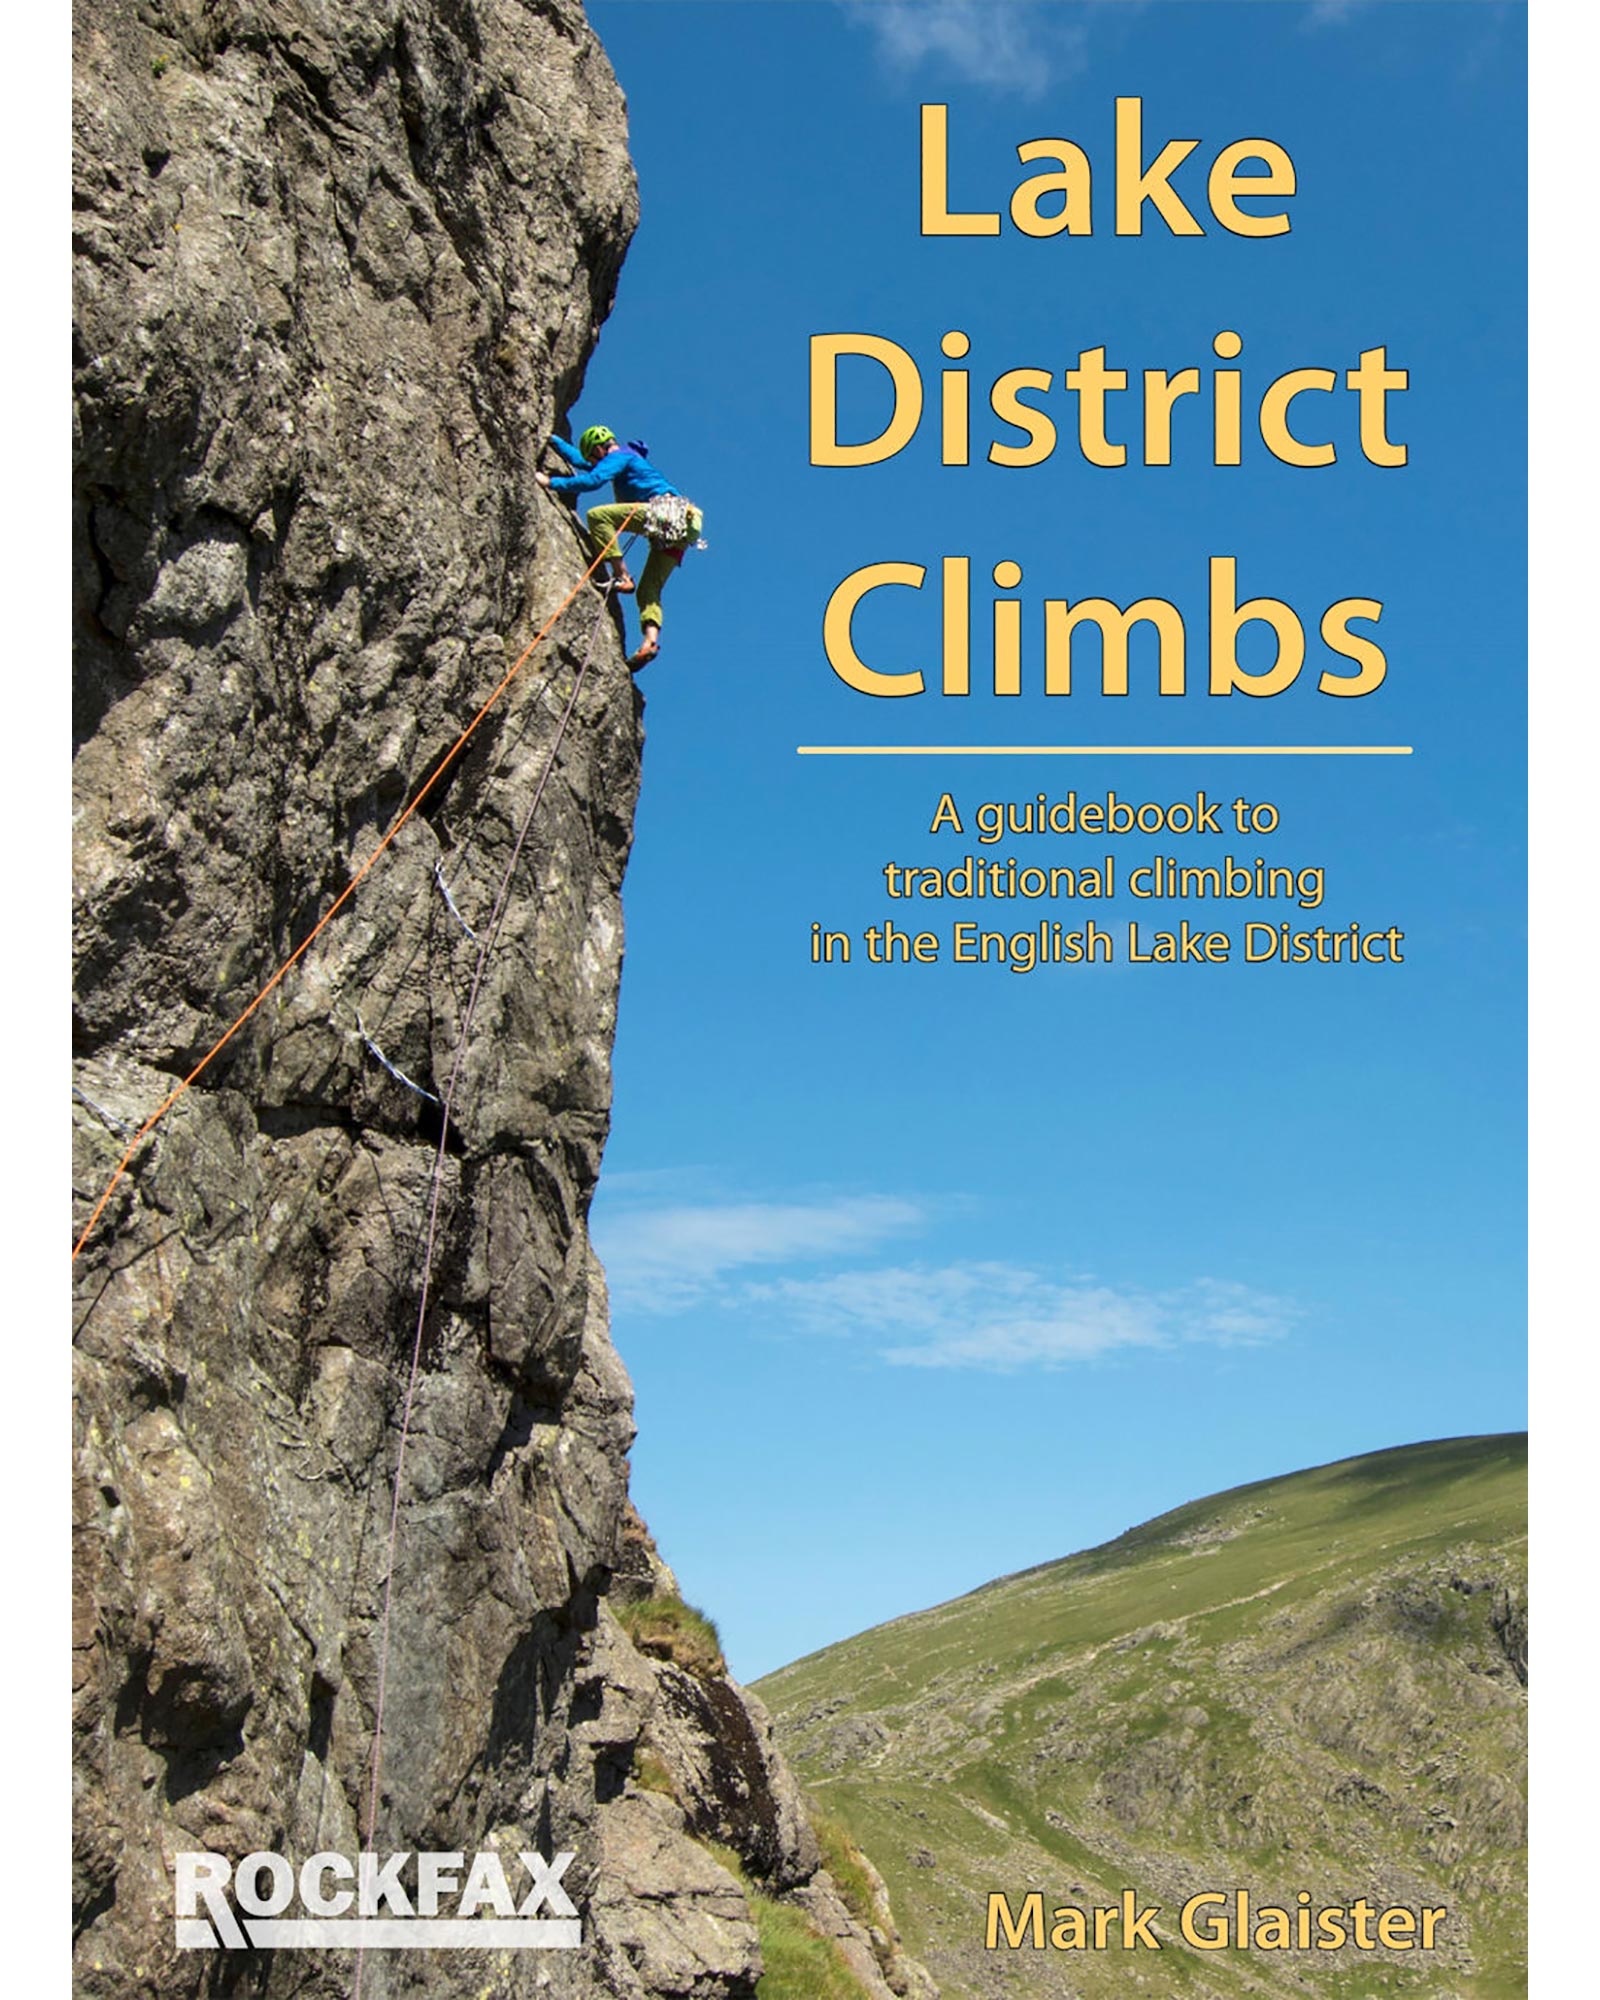 Rockfax Lake District Climbs Guide Book